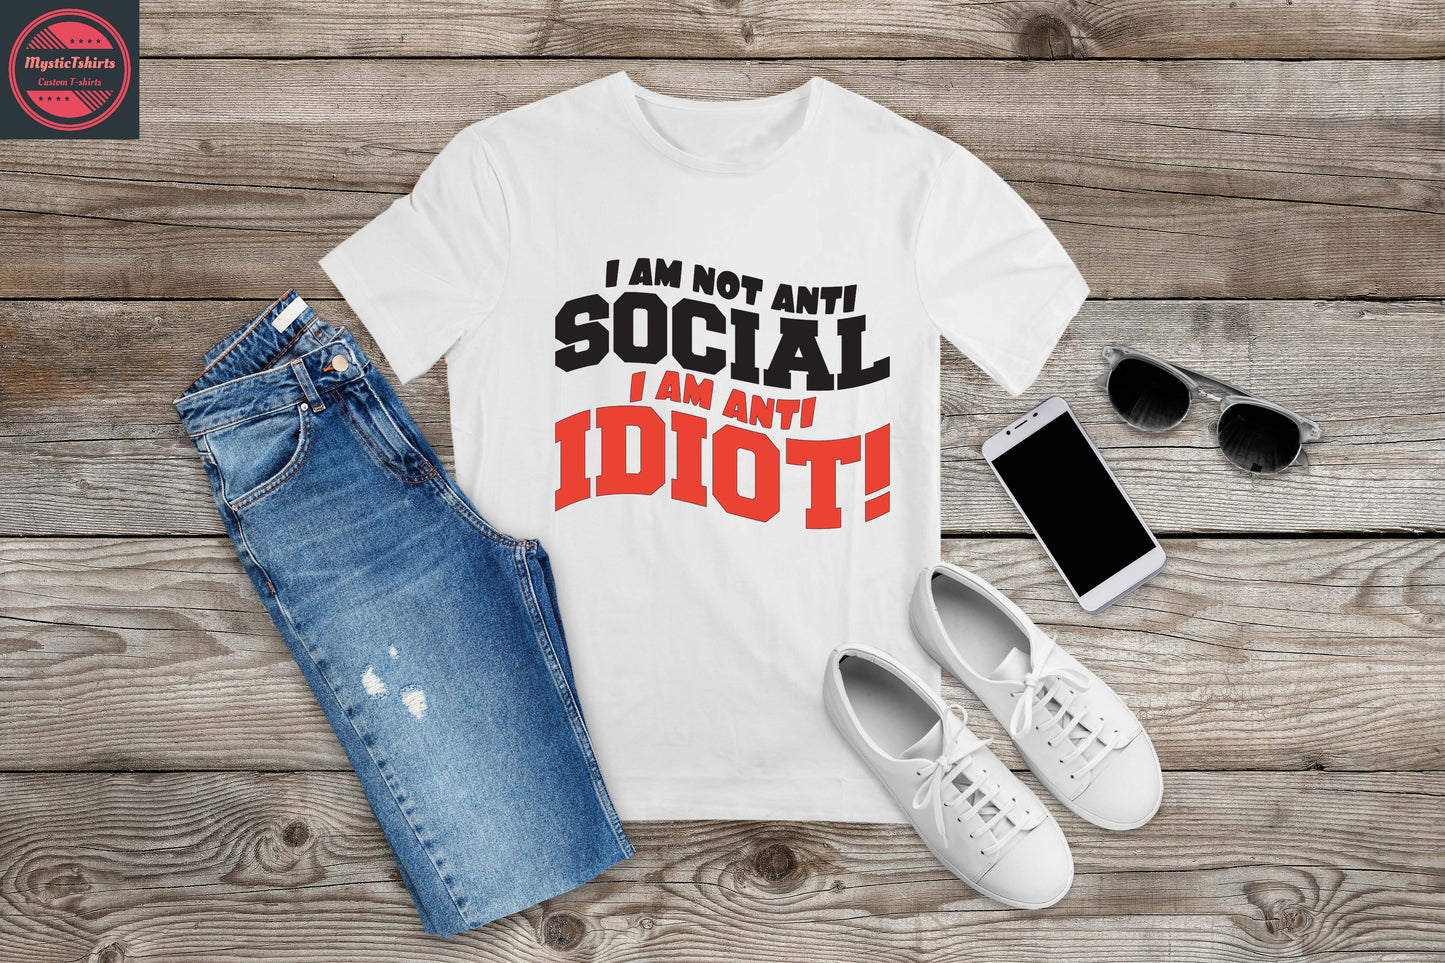 202. I AM NOT ANTI SOCIAL I AM ANTI IDIOT, Custom Made Shirt, Personalized T-Shirt, Custom Text, Make Your Own Shirt, Custom Tee